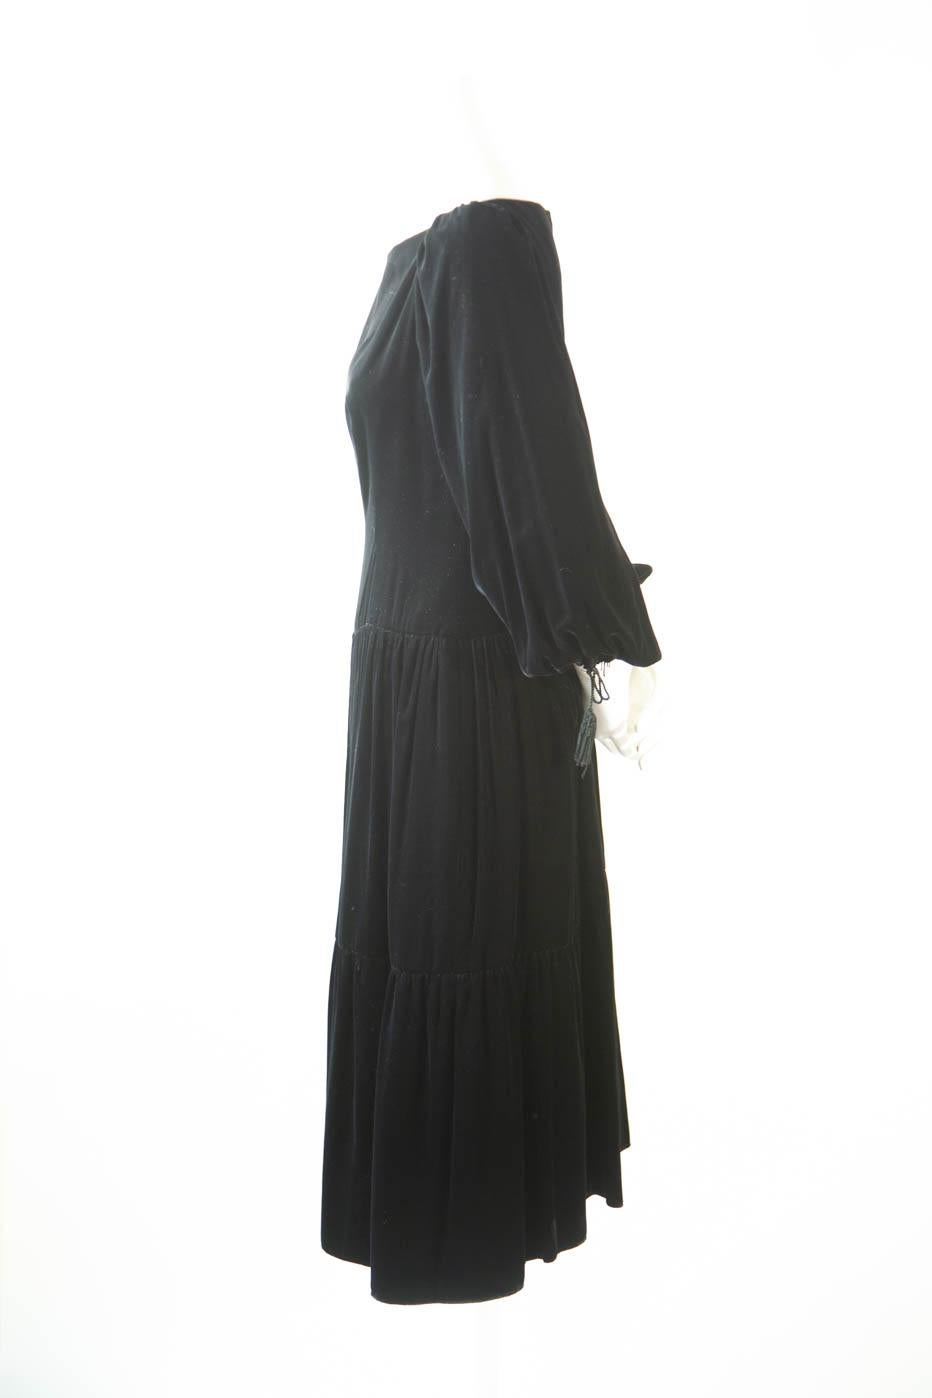 Oscar De La Renta Black velvet long sleeved dress

US 8